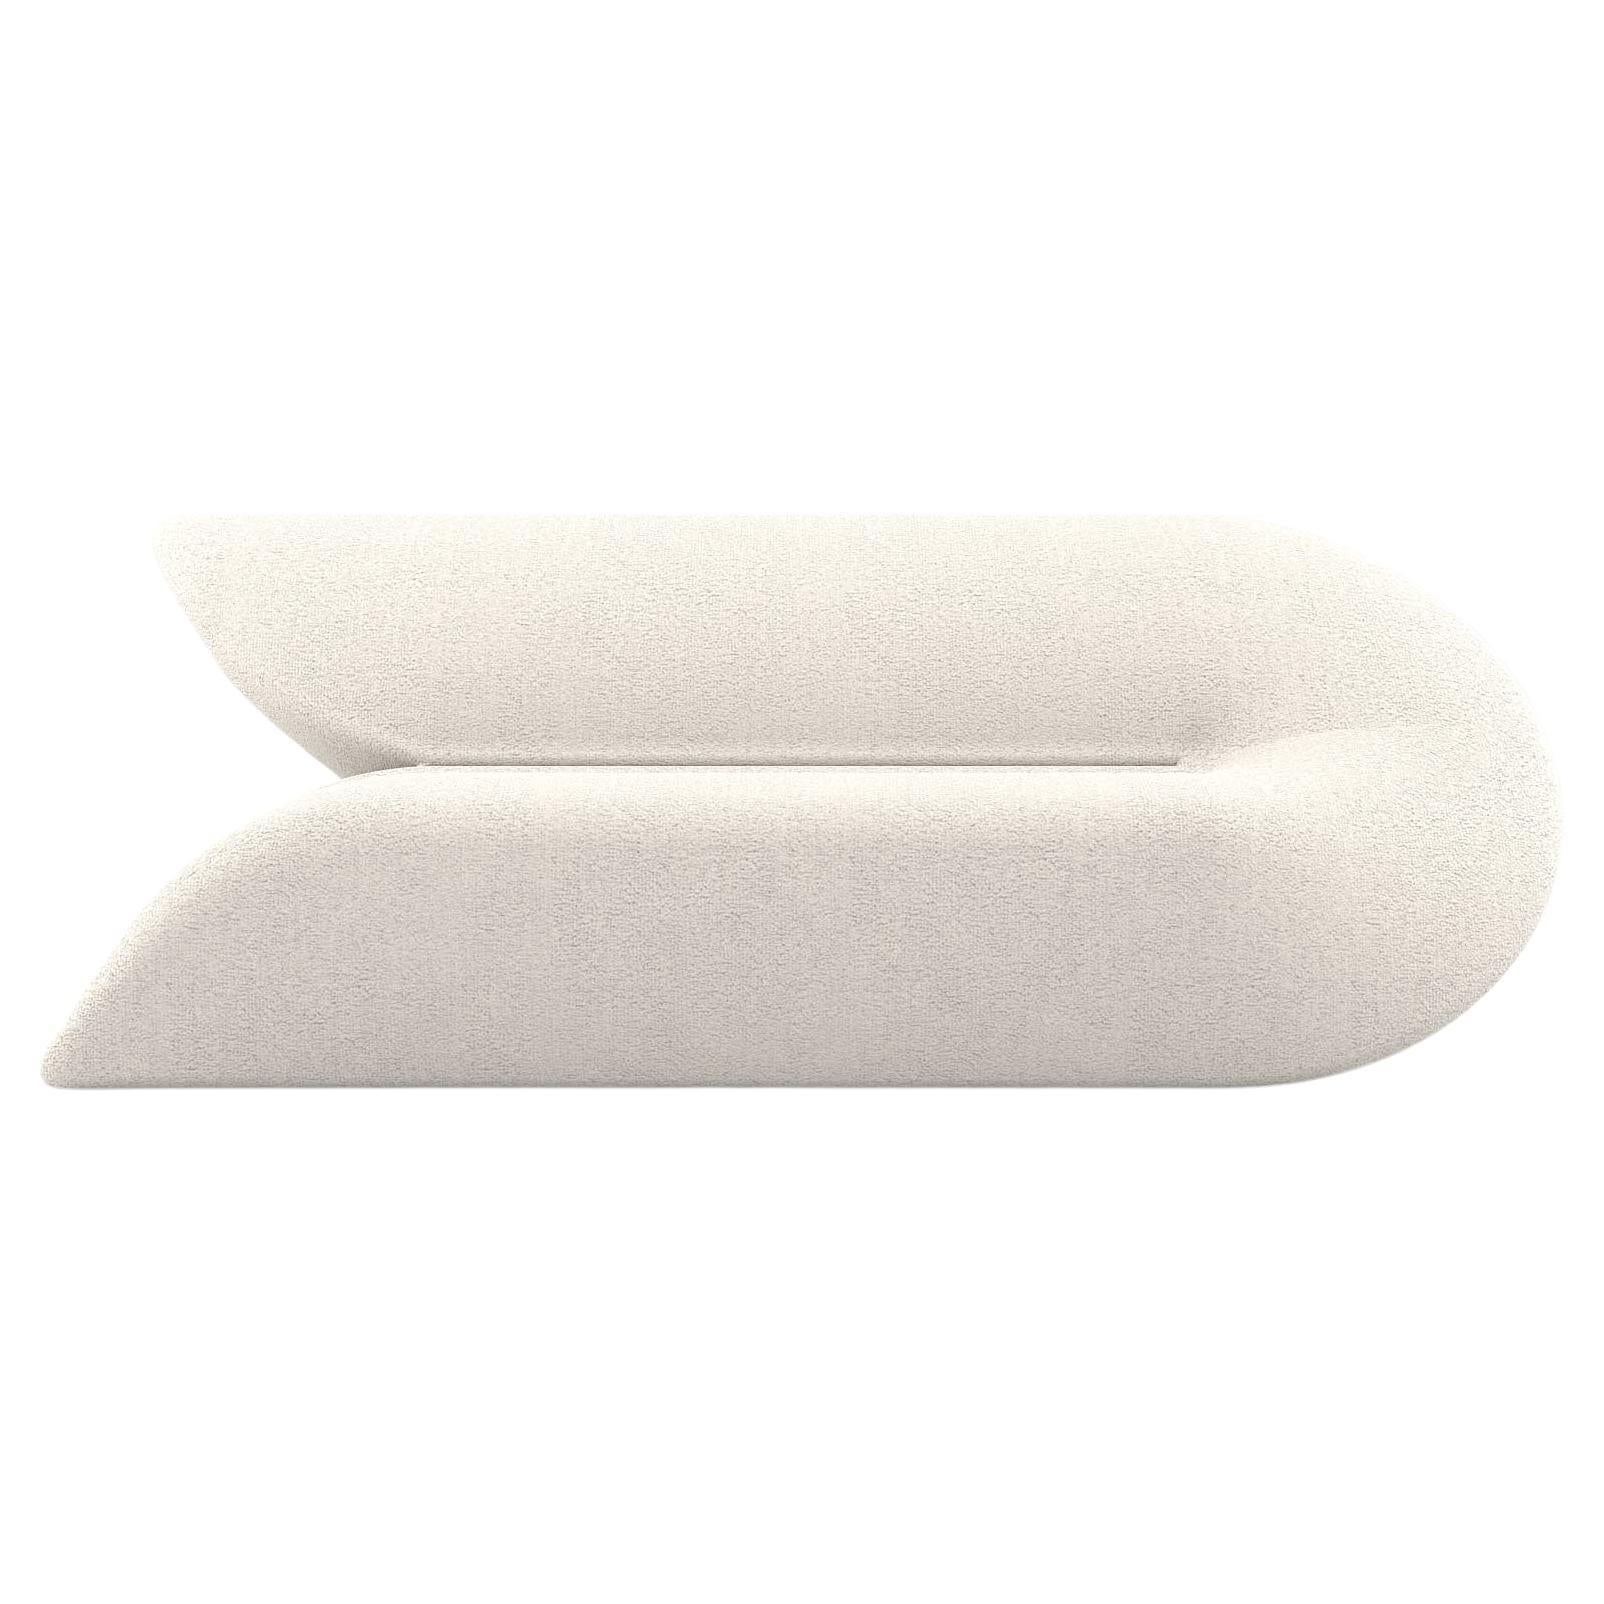 Delta Sofa - Modern White Upholstered Three Seat Sofa For Sale